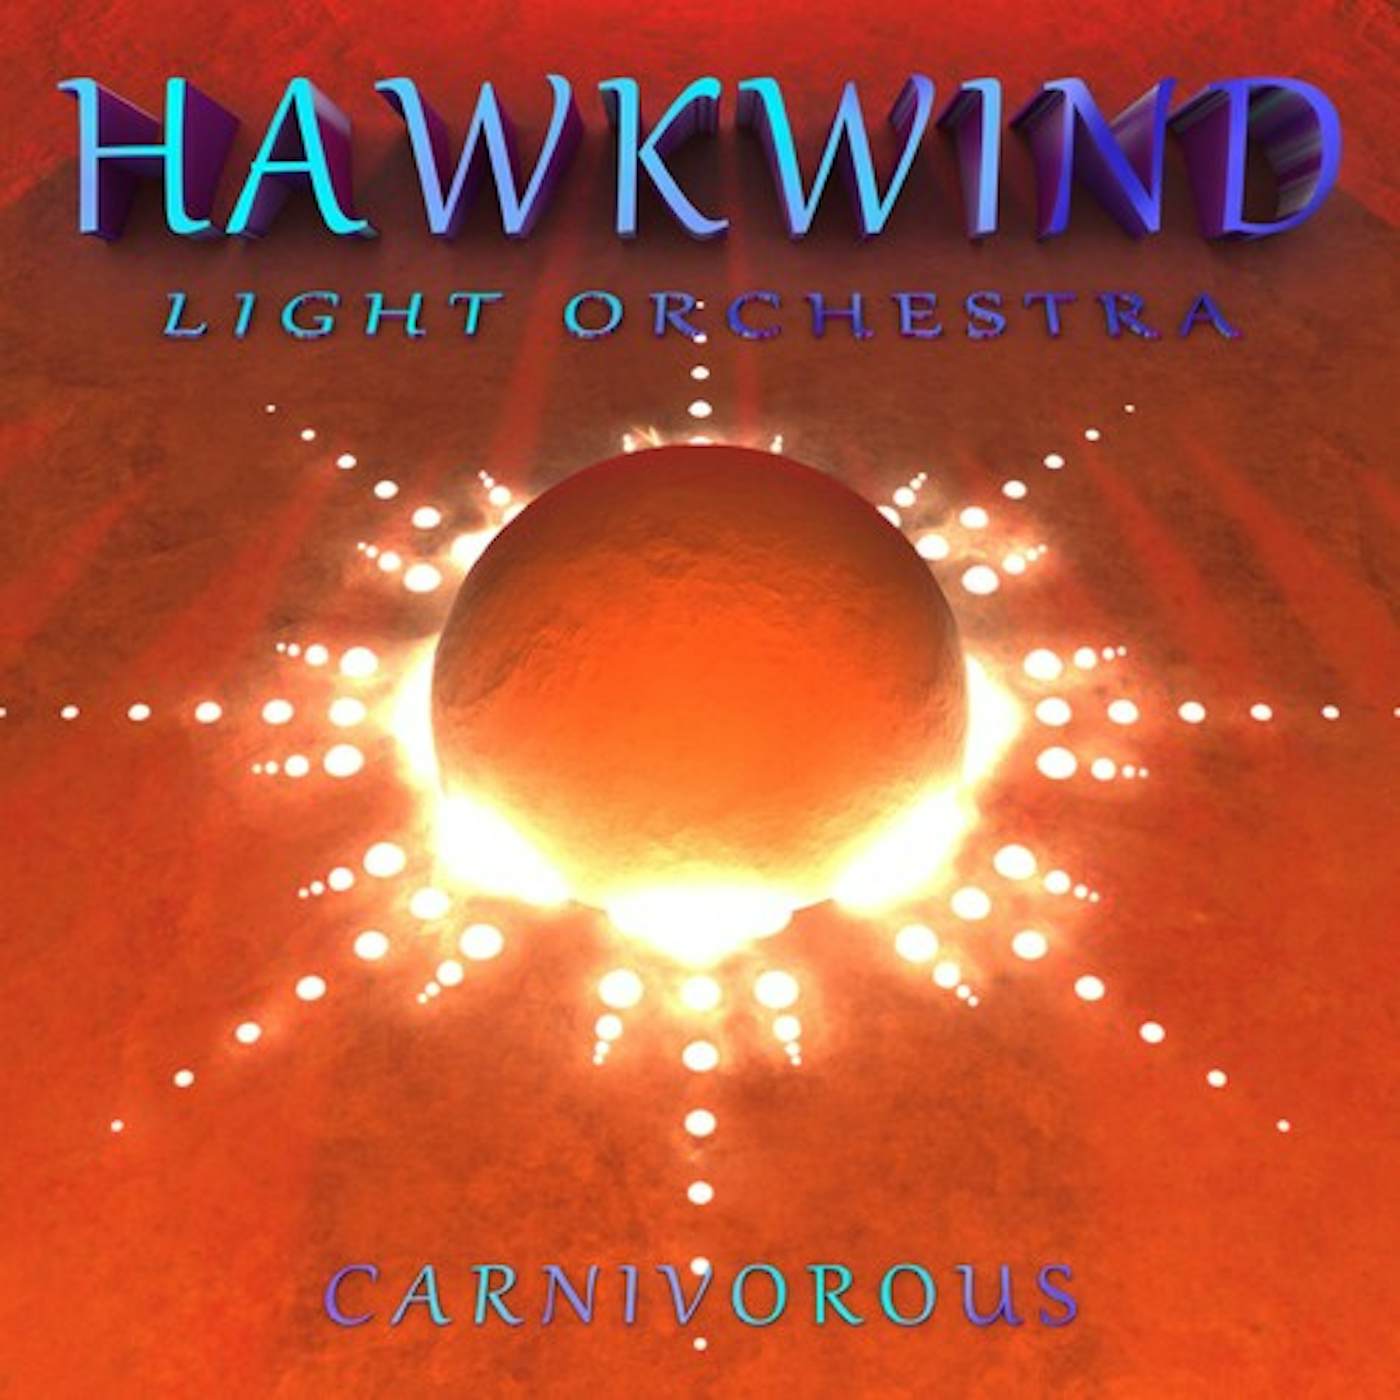 Hawkwind Light Orchestra CARNIVOROUS CD